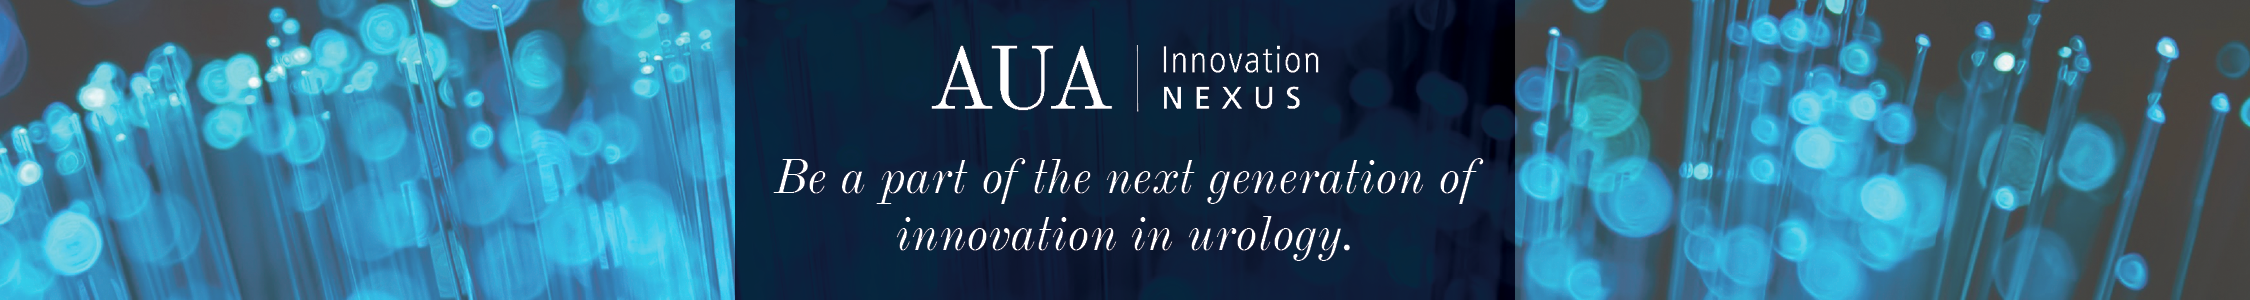 Innovation Nexus banner